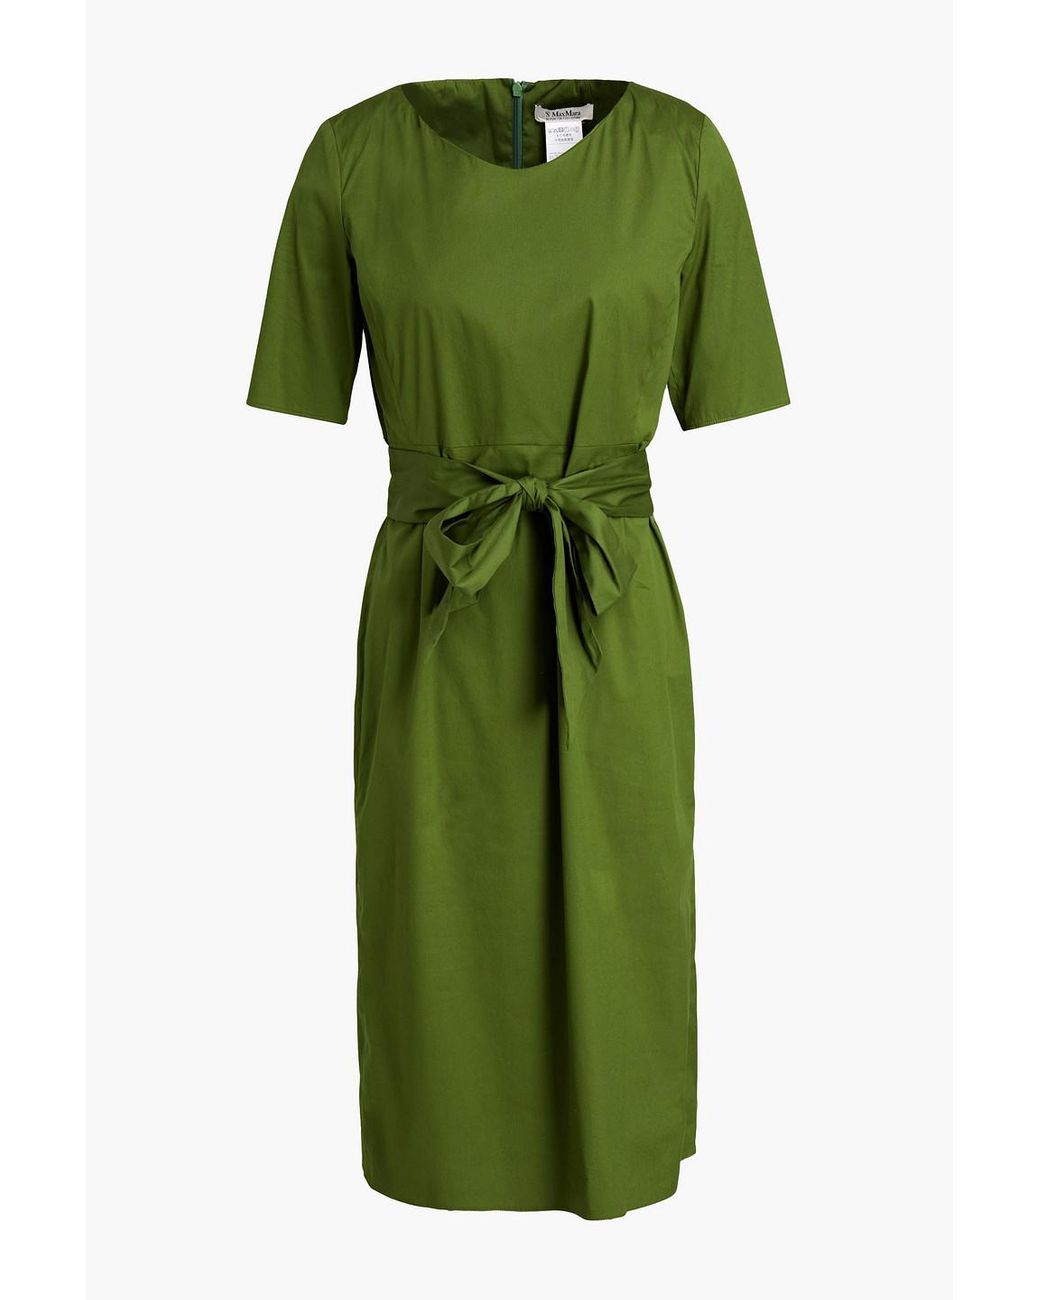 Max Mara Belted Cotton-blend Poplin Dress in Green | Lyst